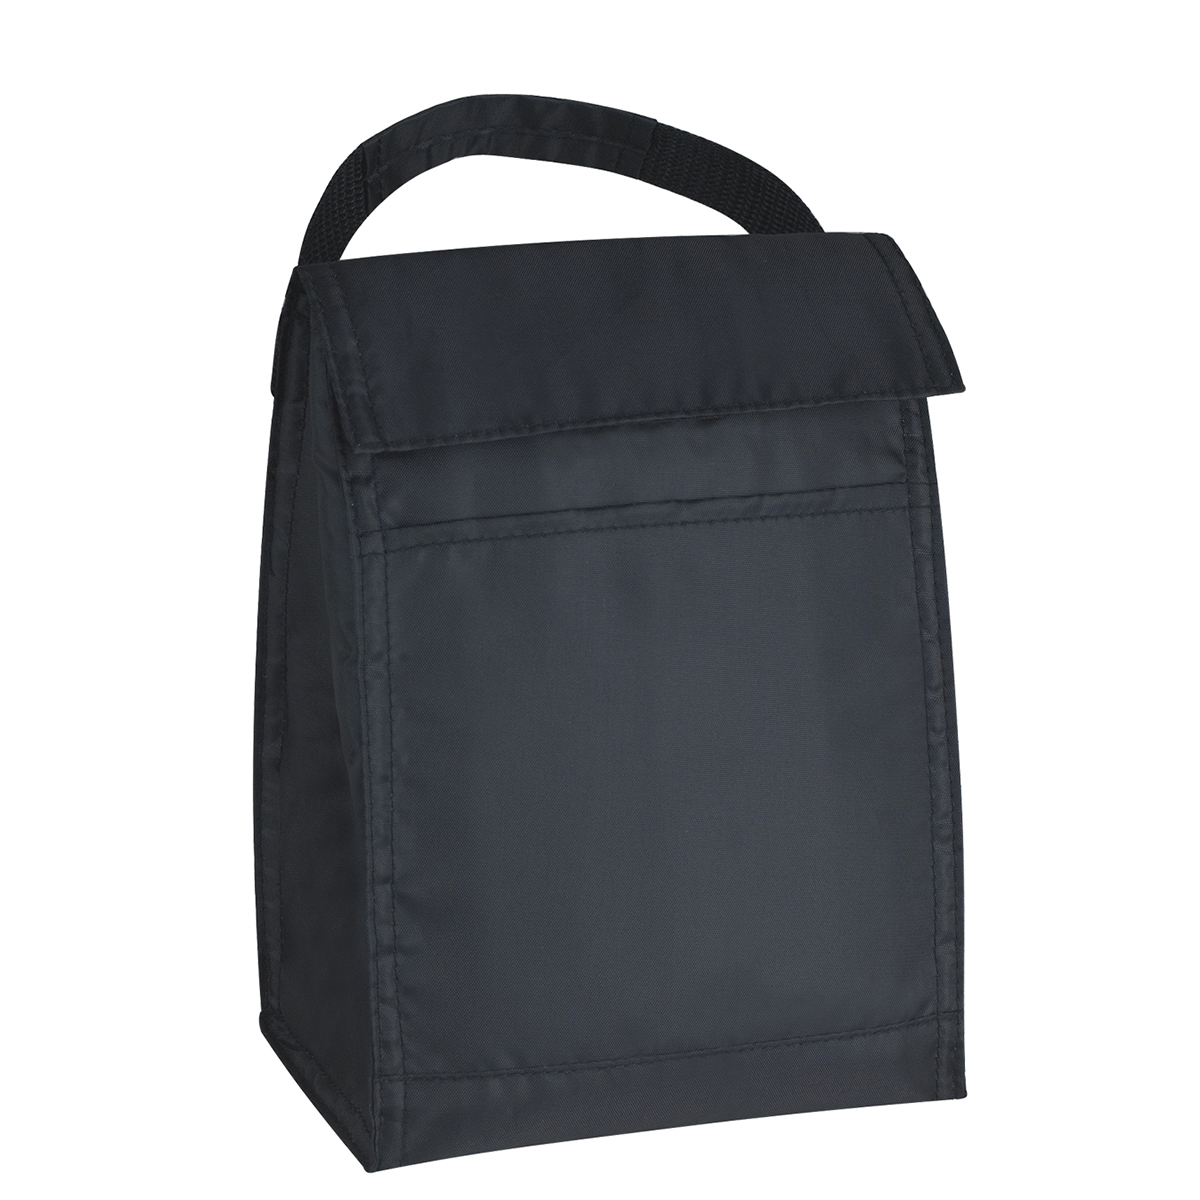 Black Budget Lunch Bag Cooler (6.875"W x 4.625"D x 9.5"H)